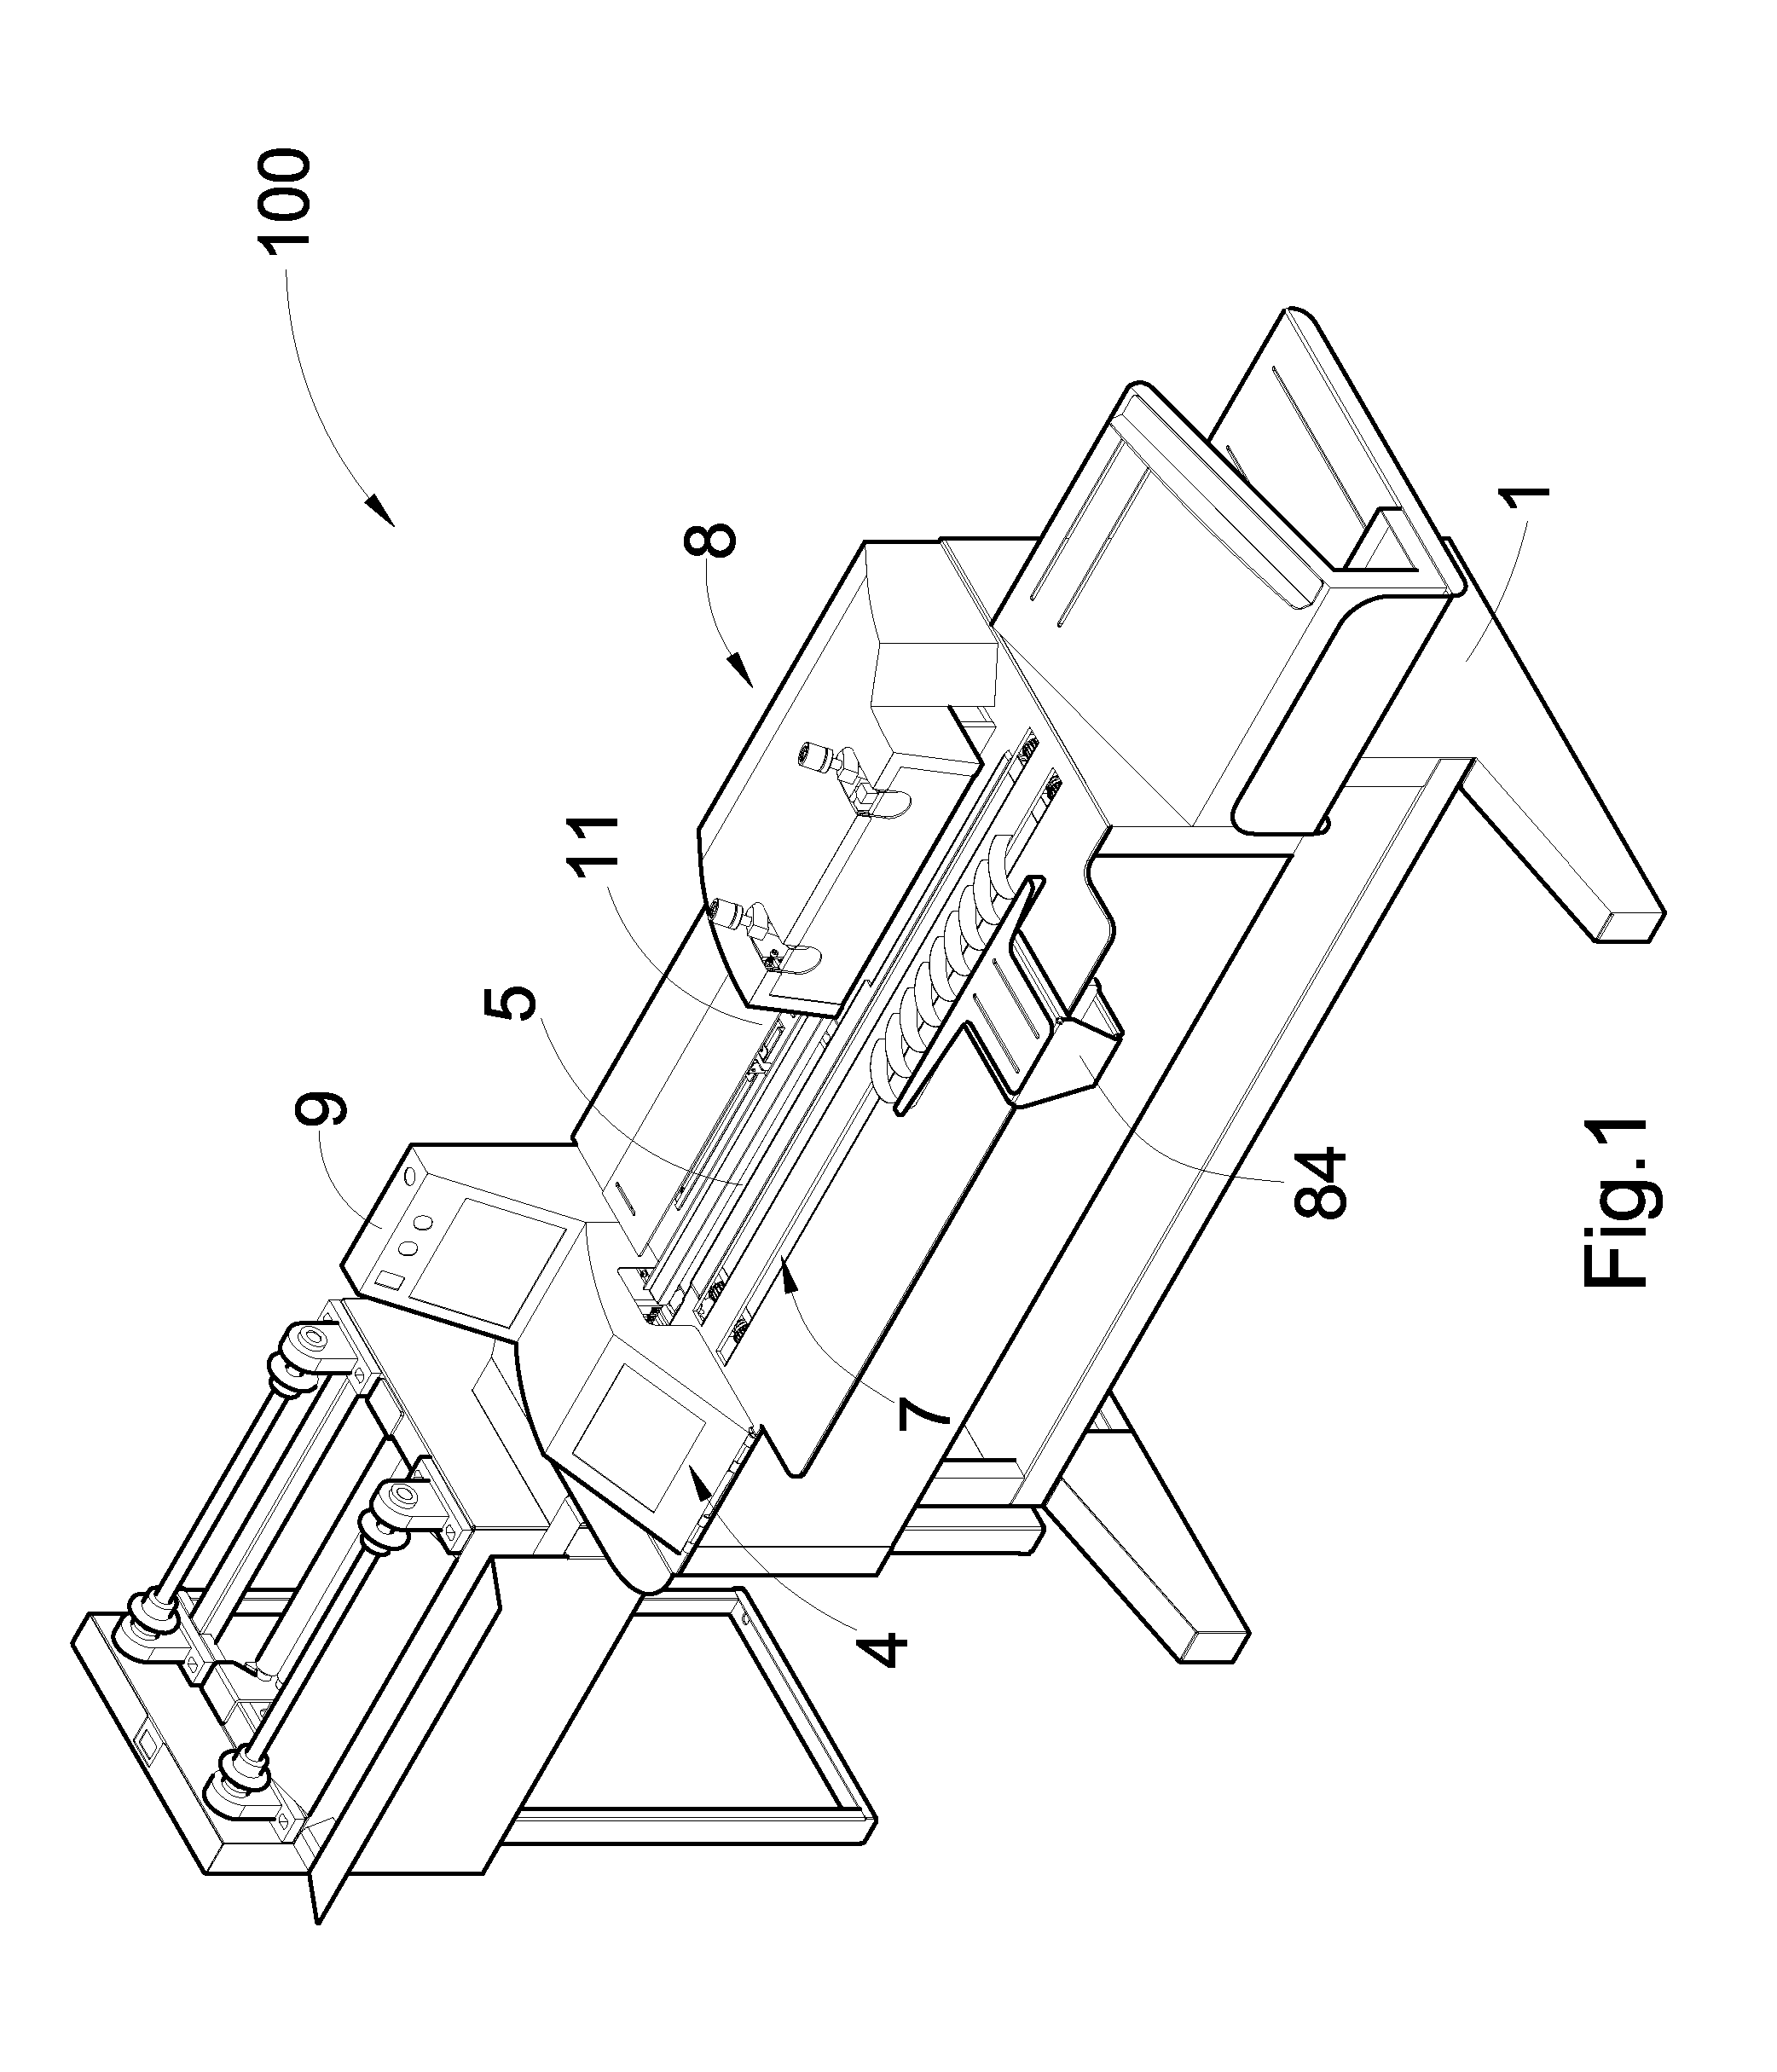 Semi-automatic coil binding machine